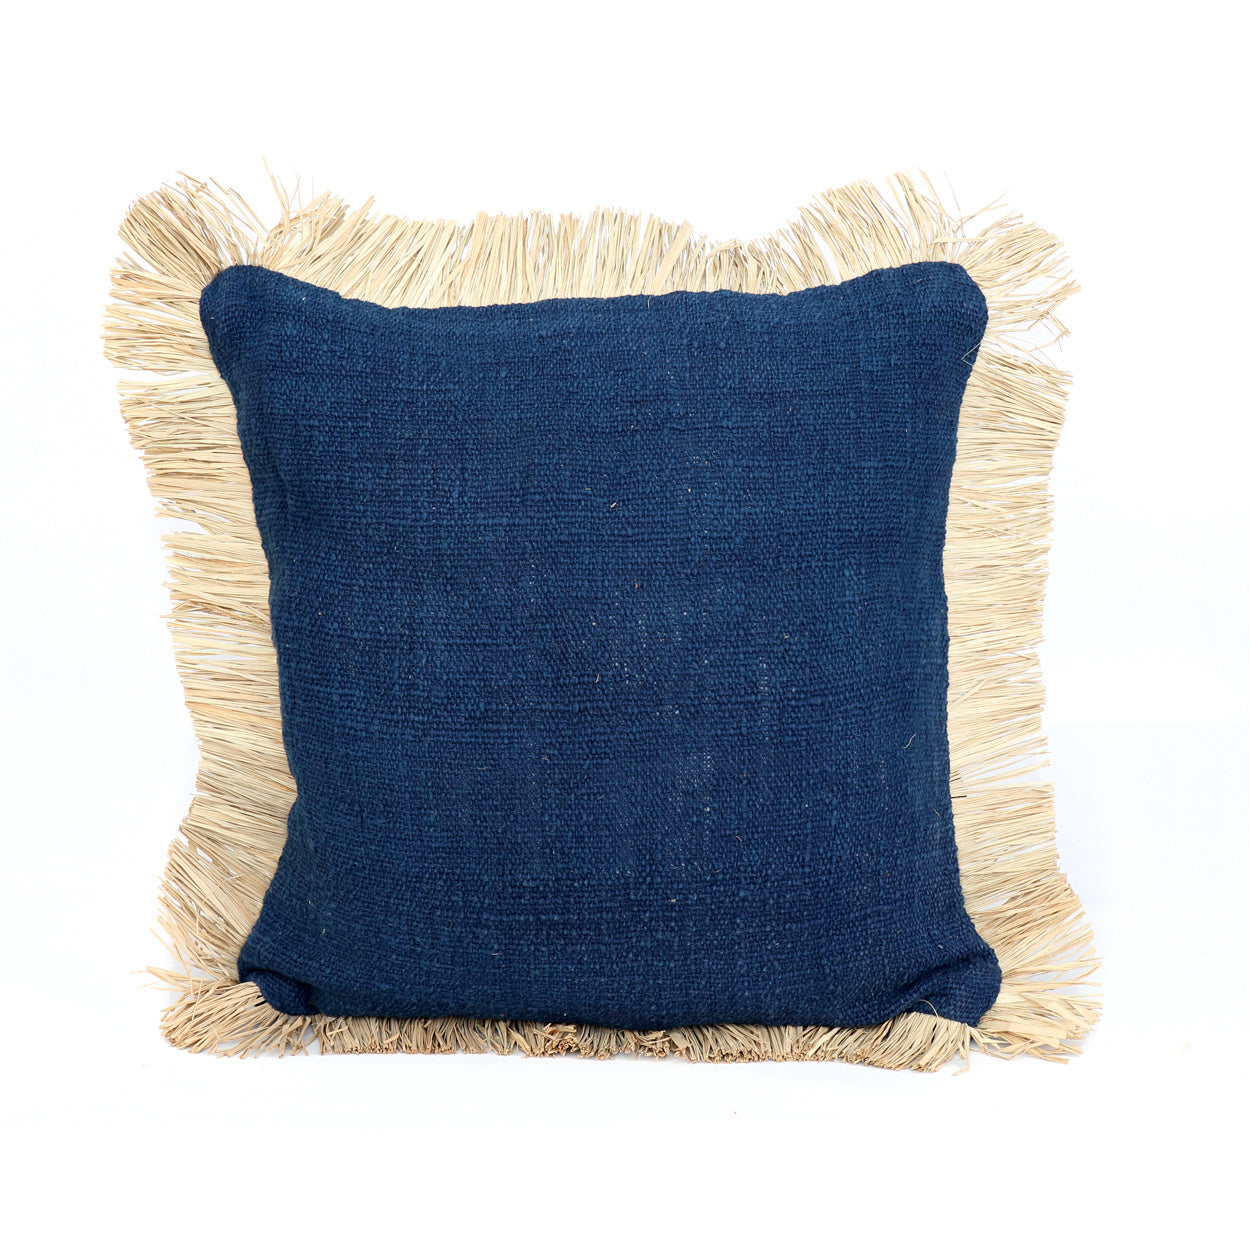 THE SAINT TROPEZ Cushion Cover Natural-Blue 50x50 front view